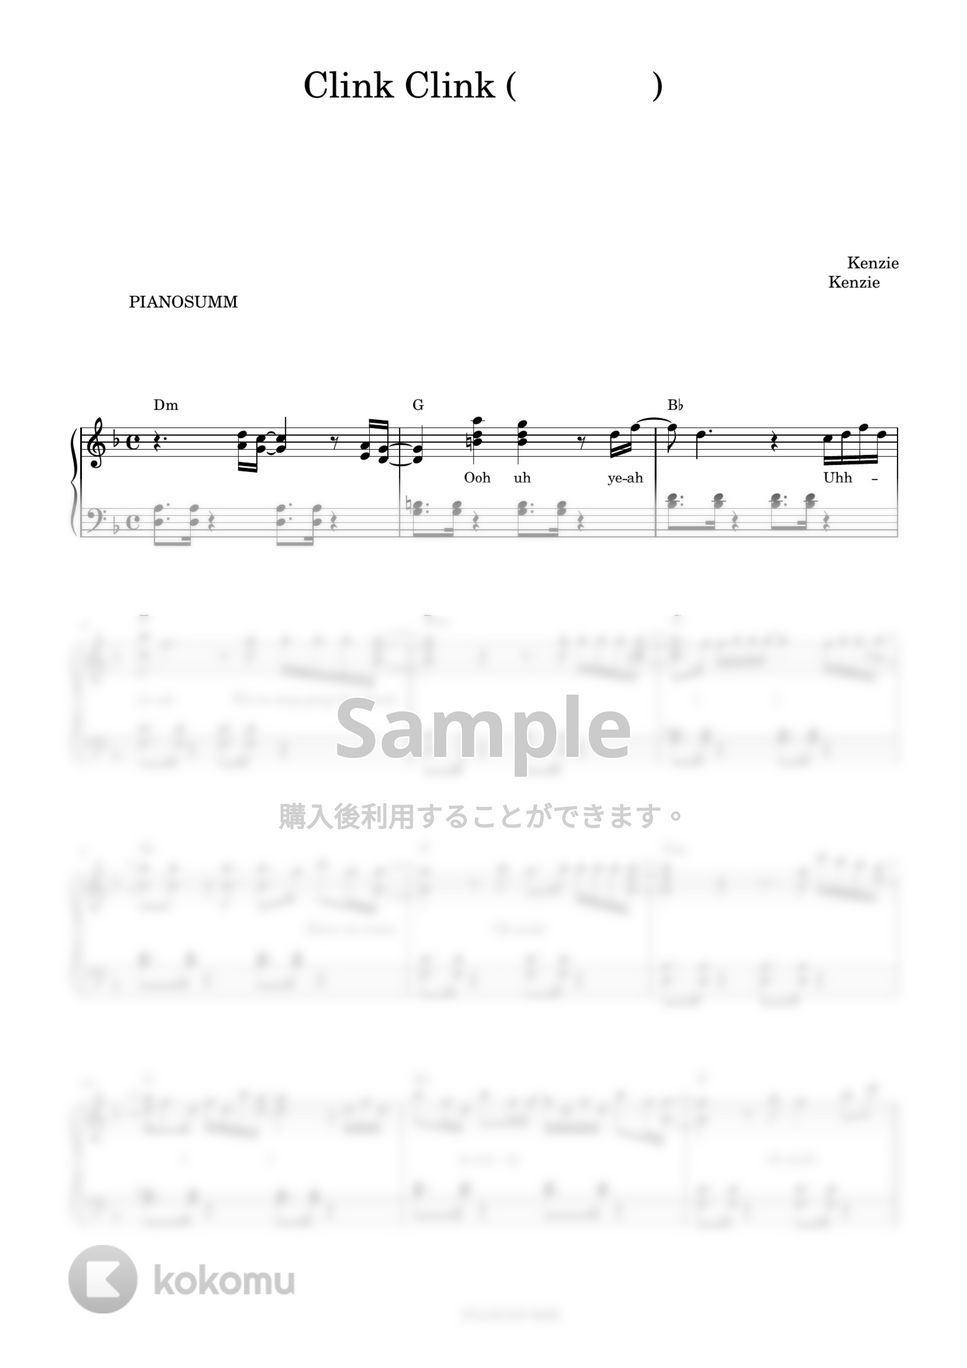 WSG WANNABE (Oh Ah Siso) - Clink Clink by PIANOSUMM